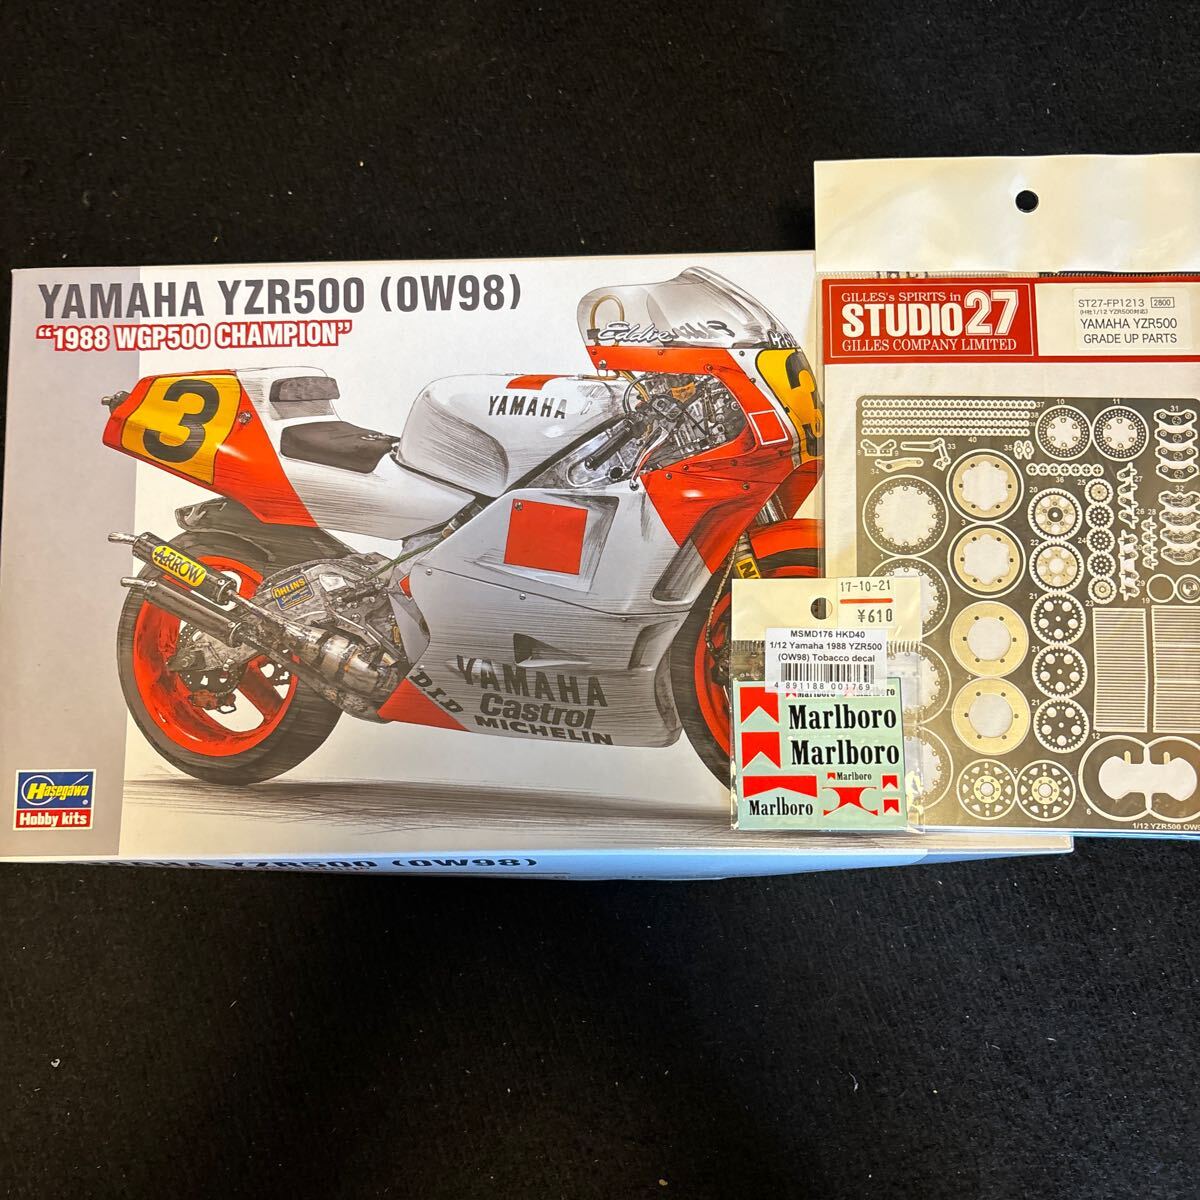  Yamaha YZR500 (0W98) *1988 WGP500 Champion (1/12 scale BK3)+STUDIO27 etching parts + Marlboro decal 